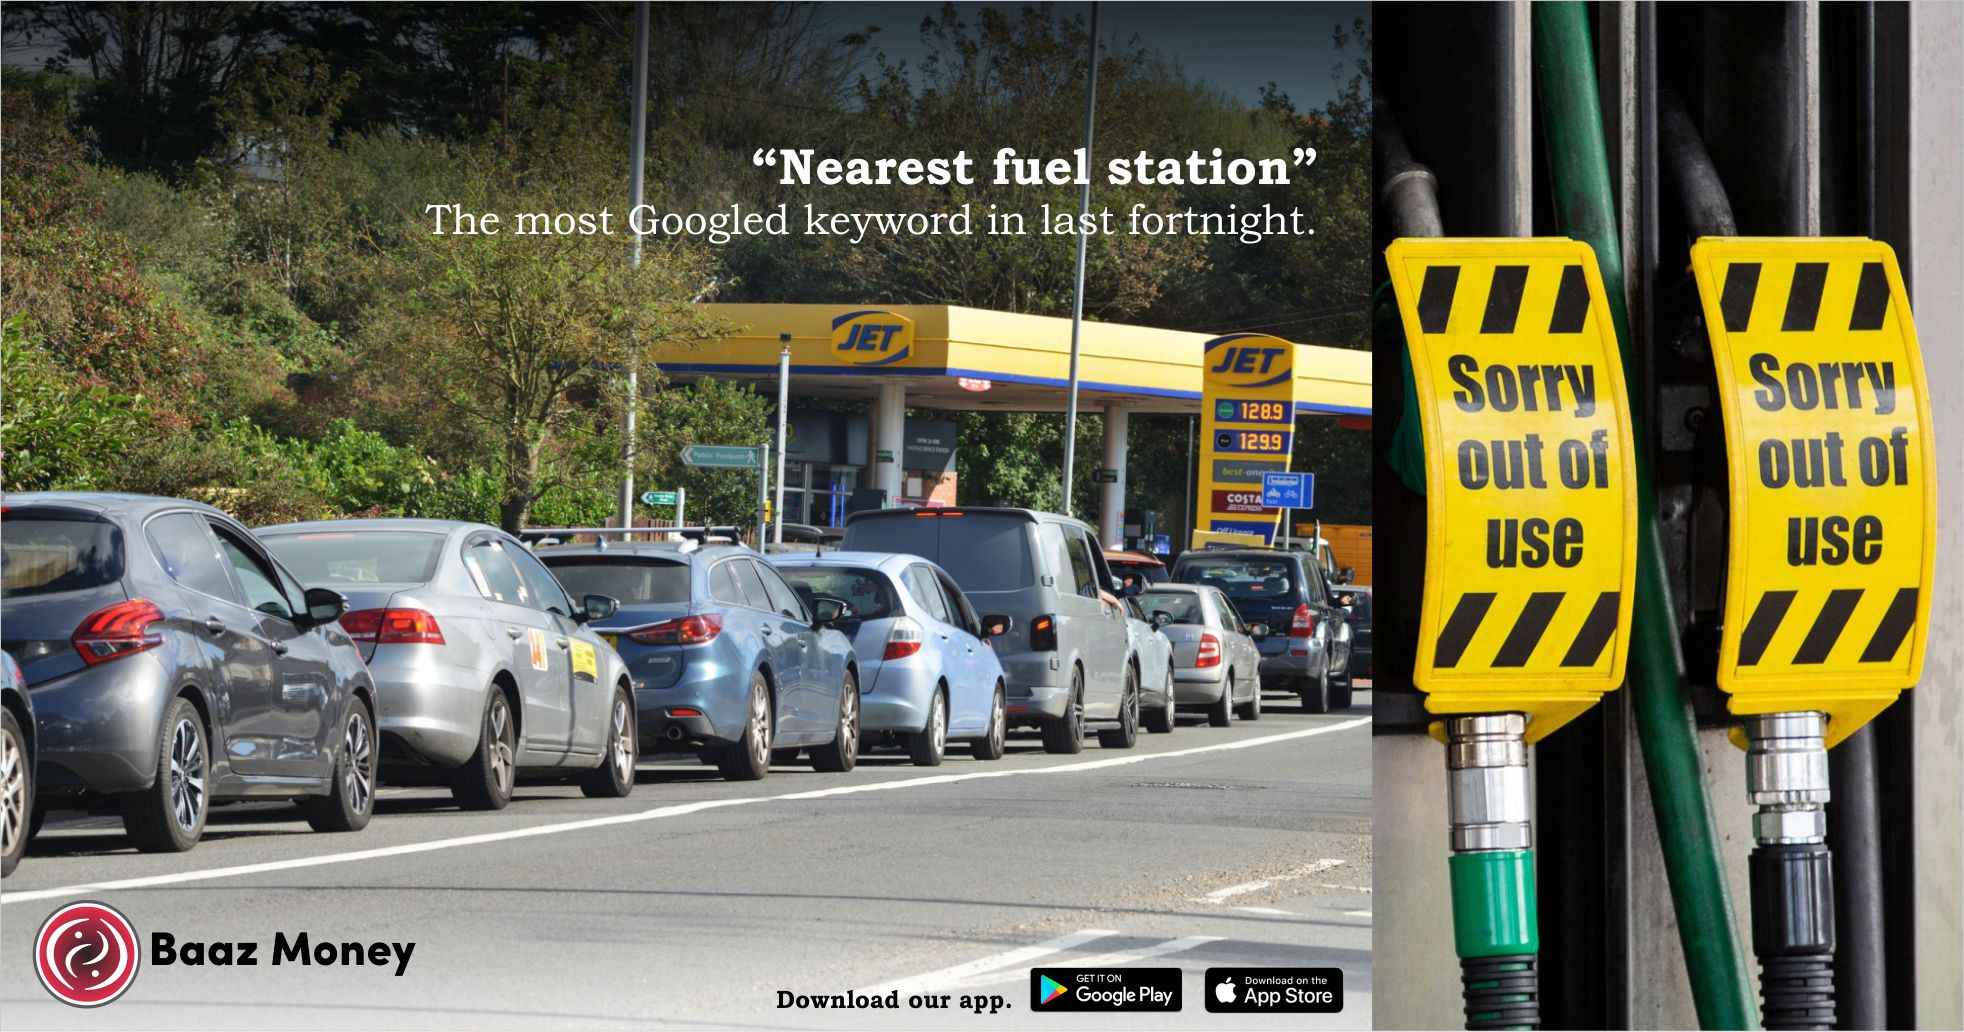 “Nearest fuel station”, the most Googled keyword in last fortnight